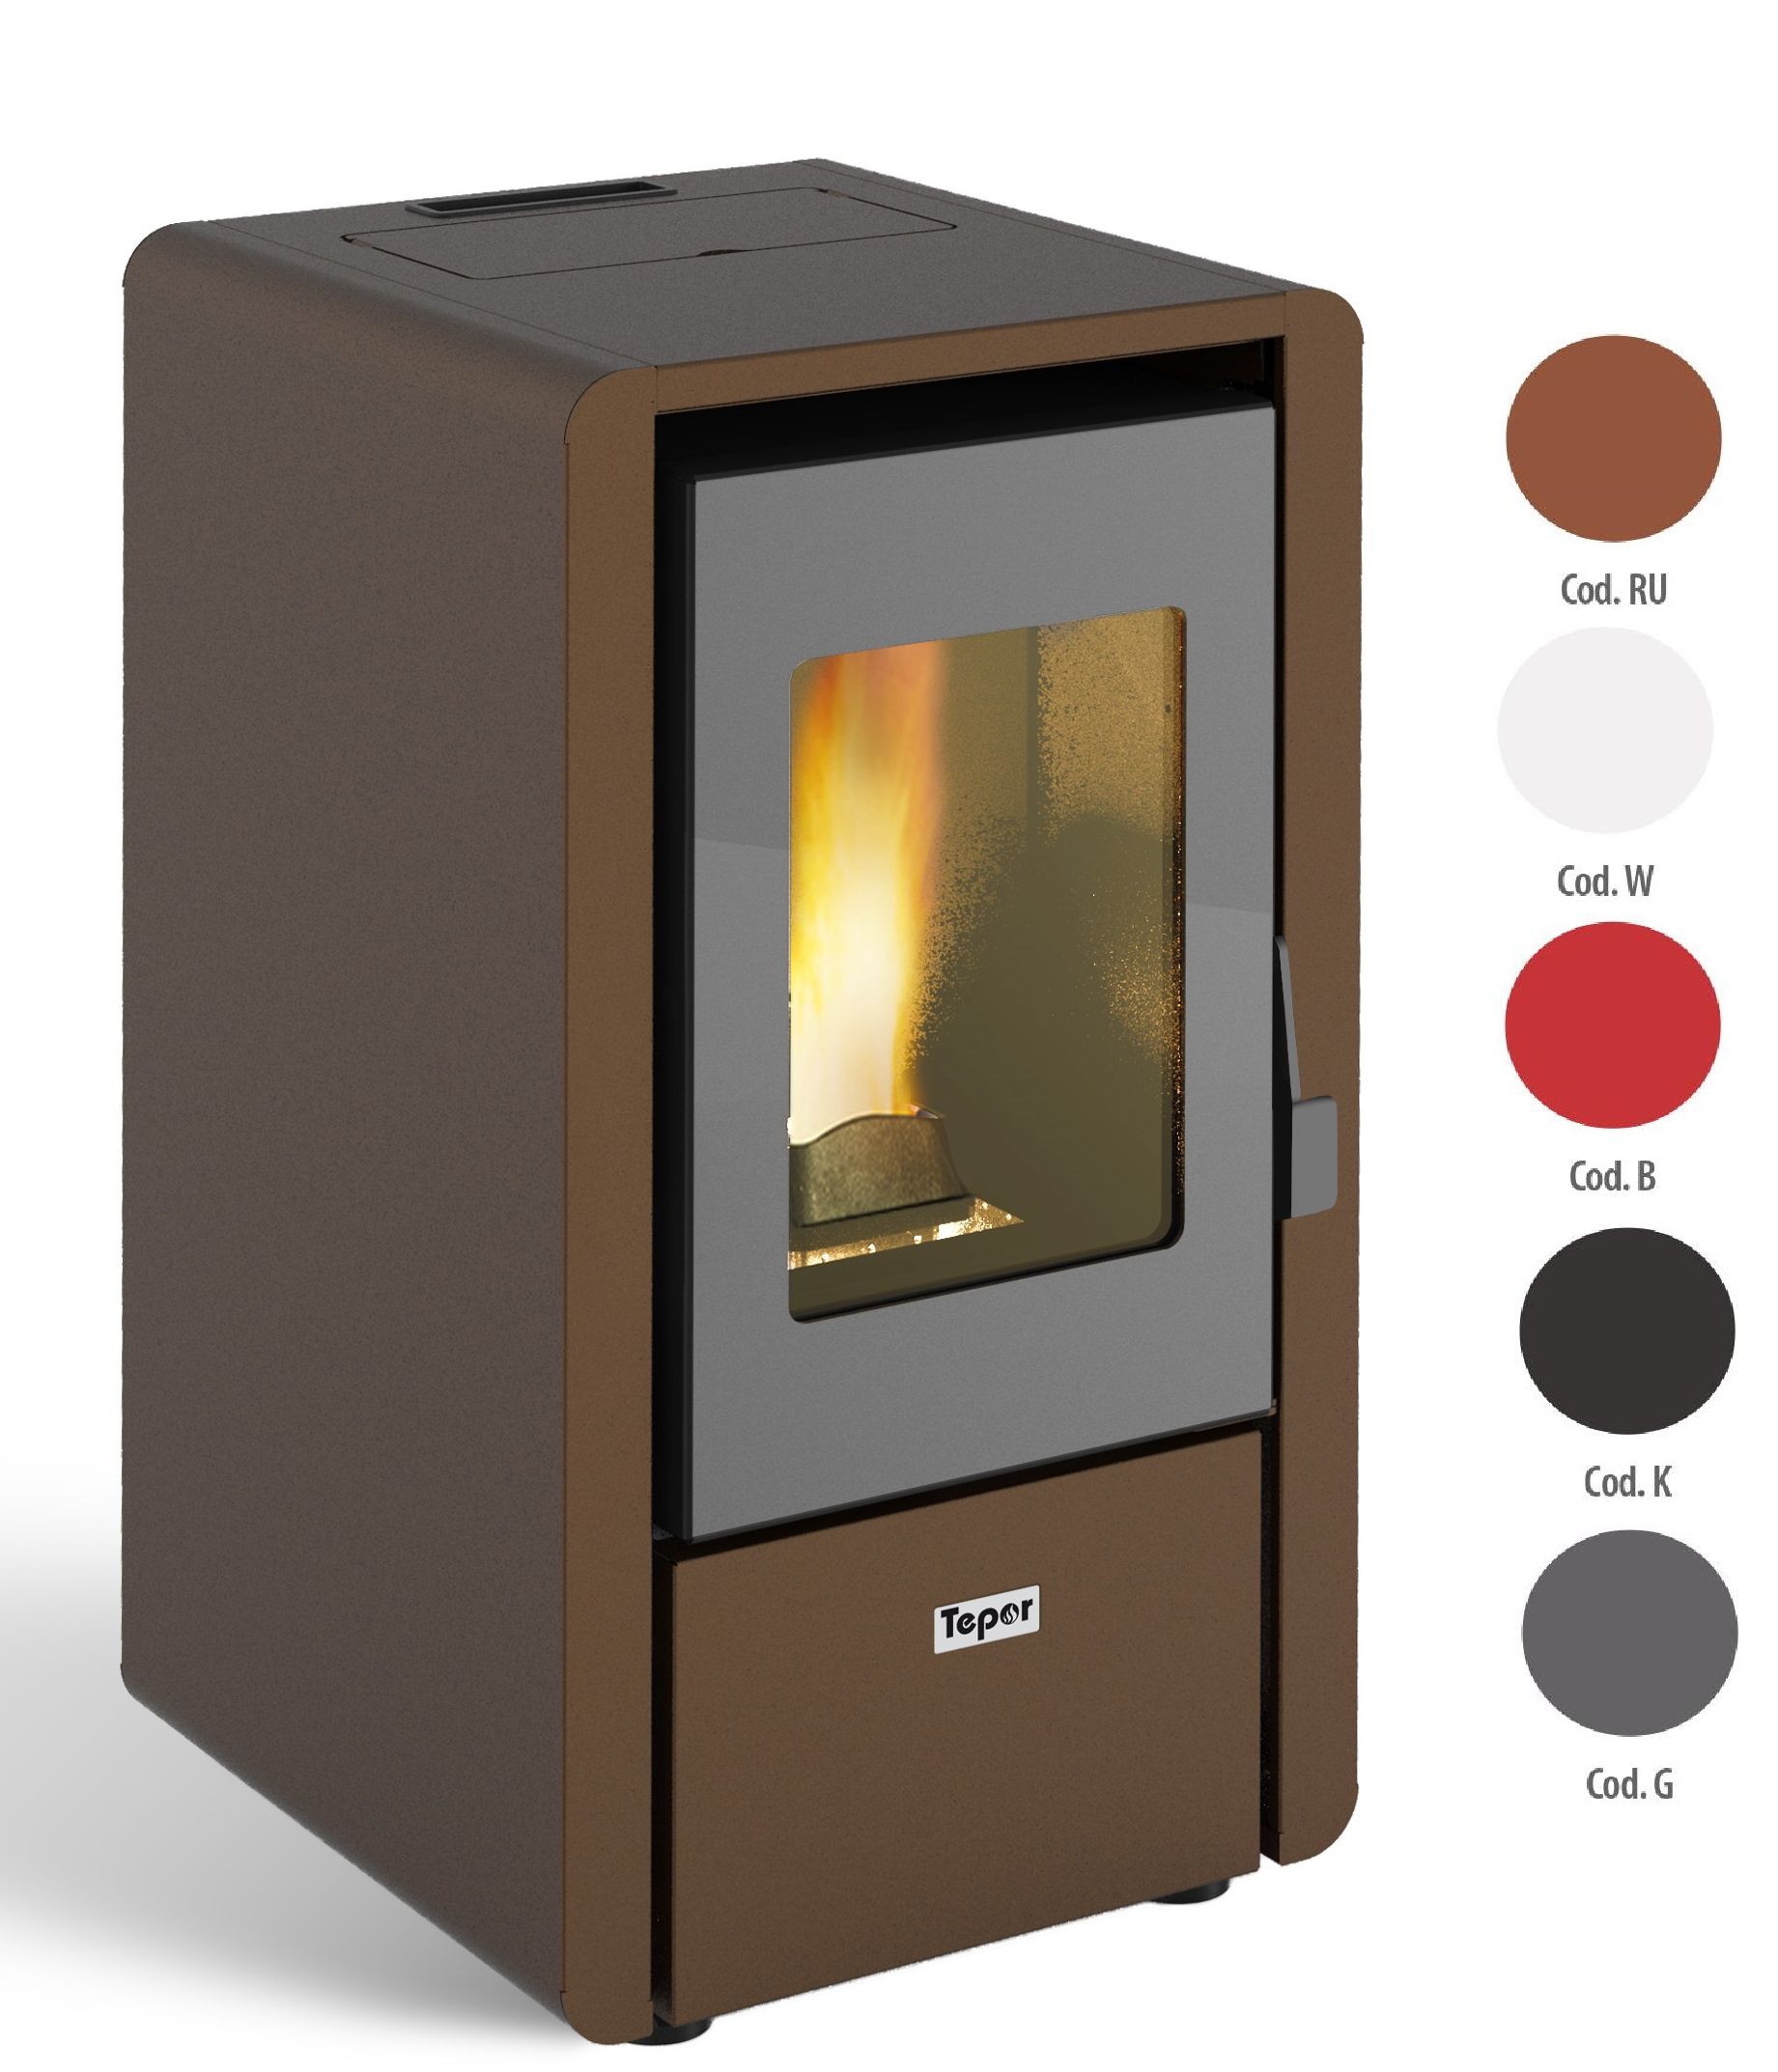 Petite air-heated pellet fireplace